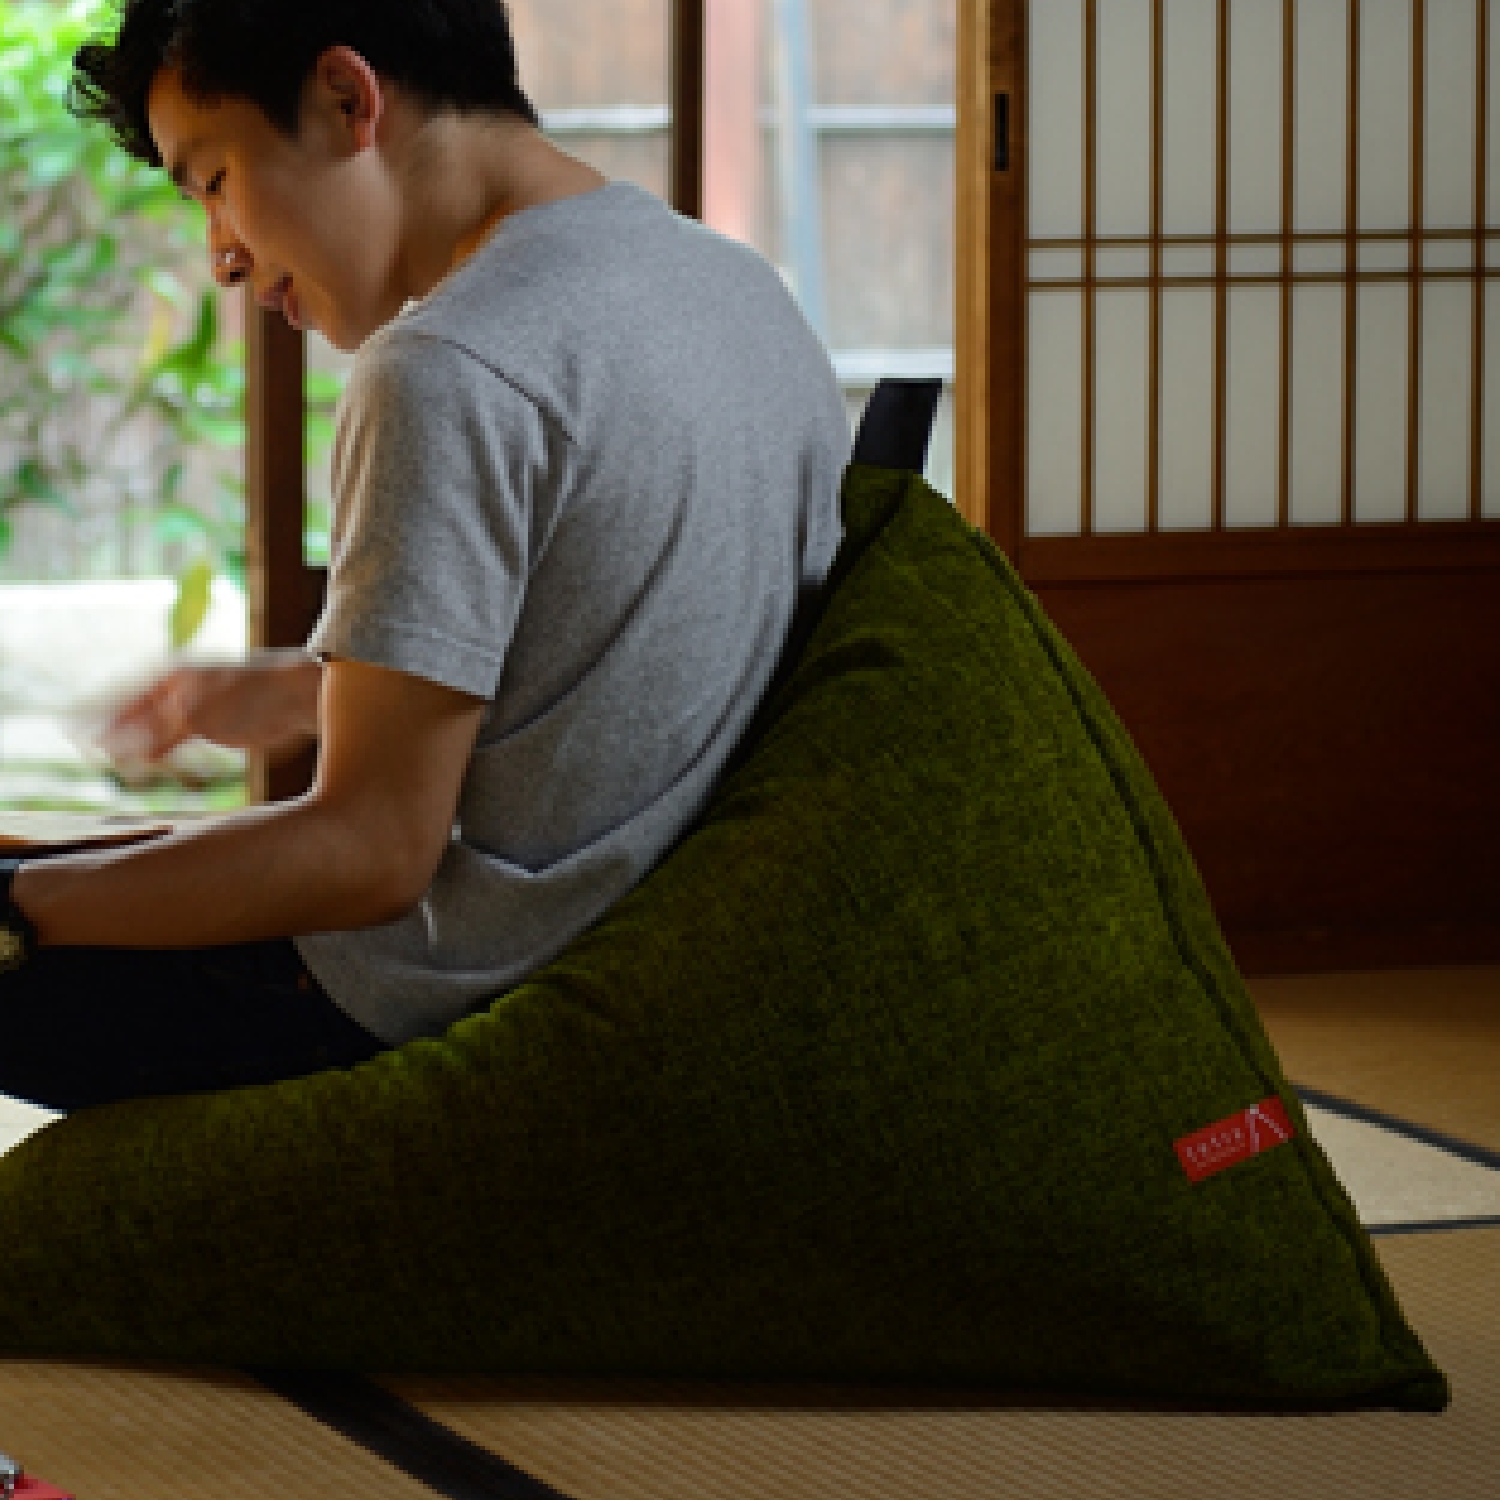 tetra grande KOKE ビーズクッション レギュラーサイズ -京都の寝具 